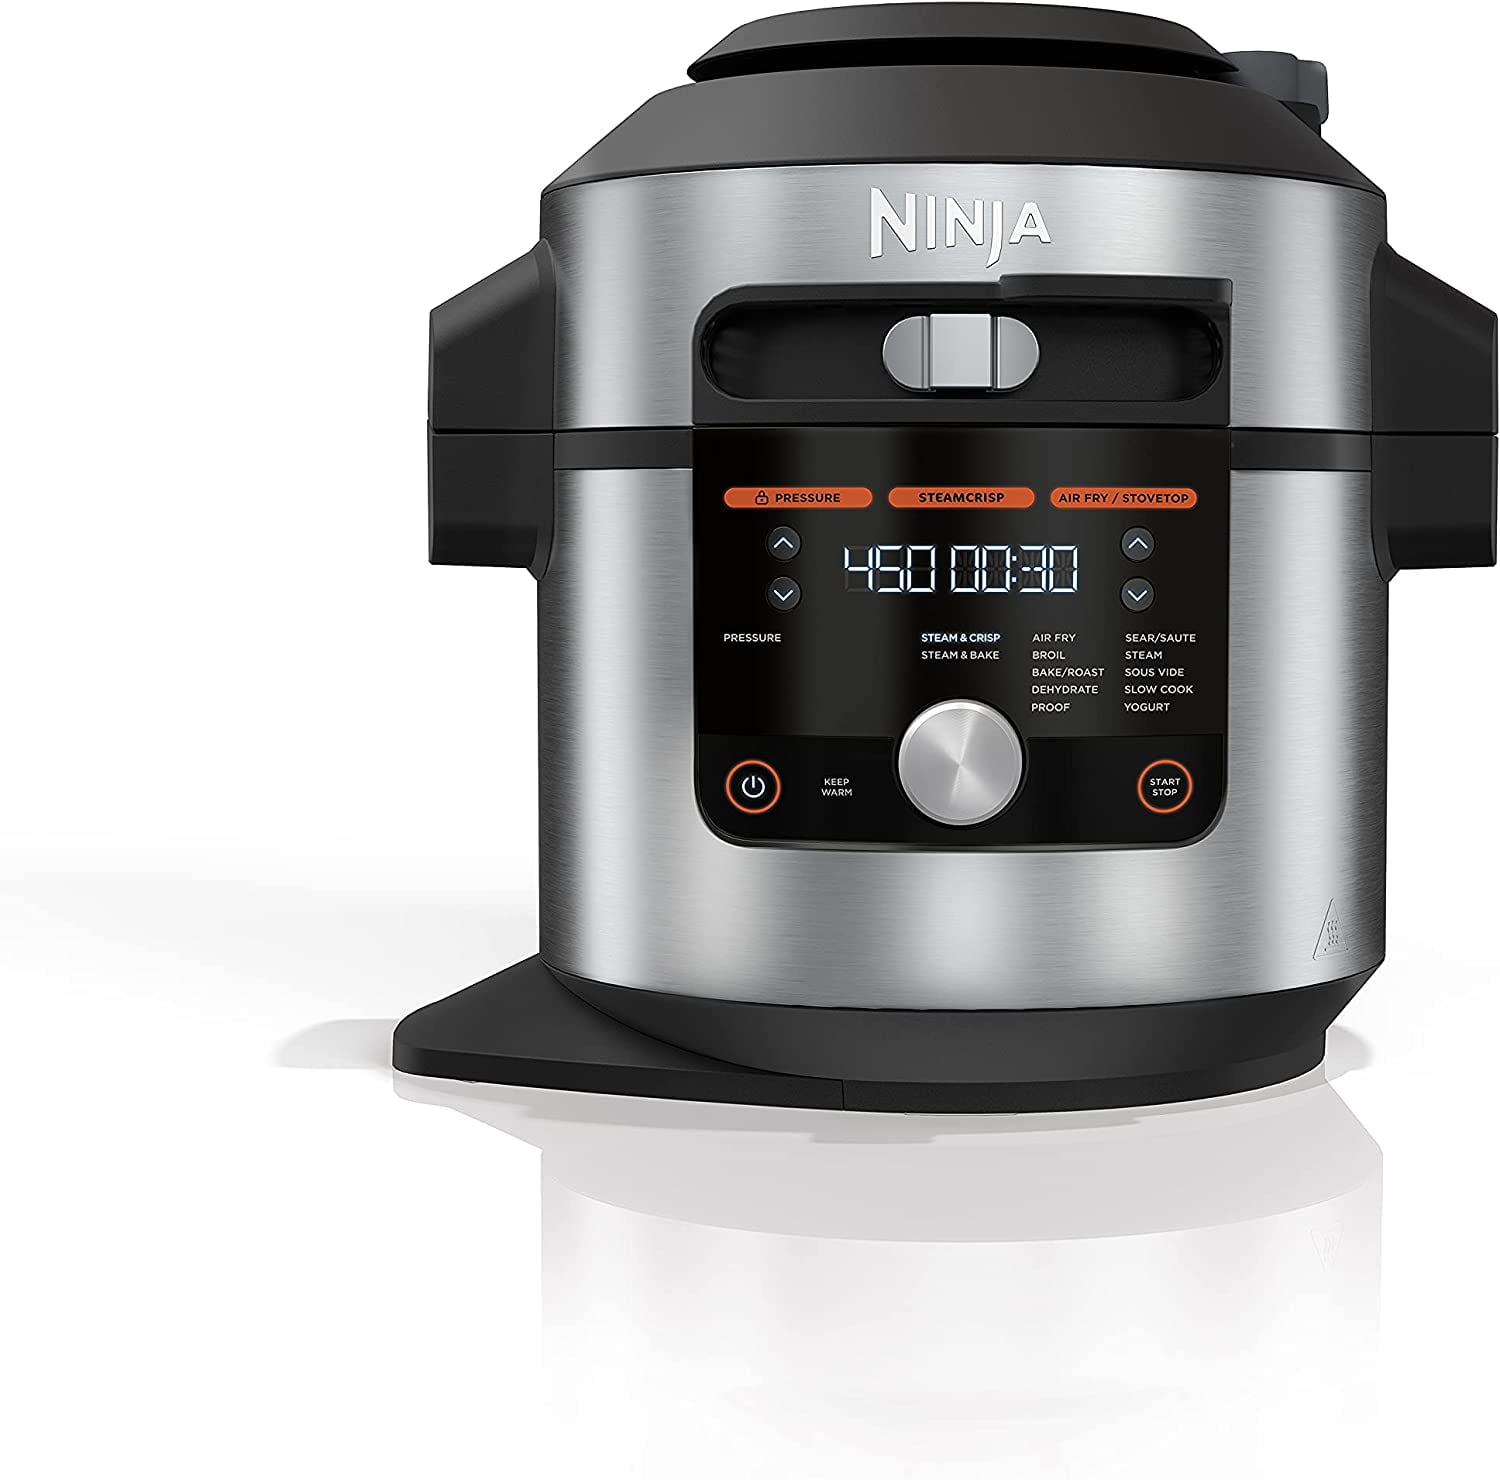 Best Buy: Ninja Foodi 14-in-1, 6.5-QT Pressure Cooker Steam Fryer